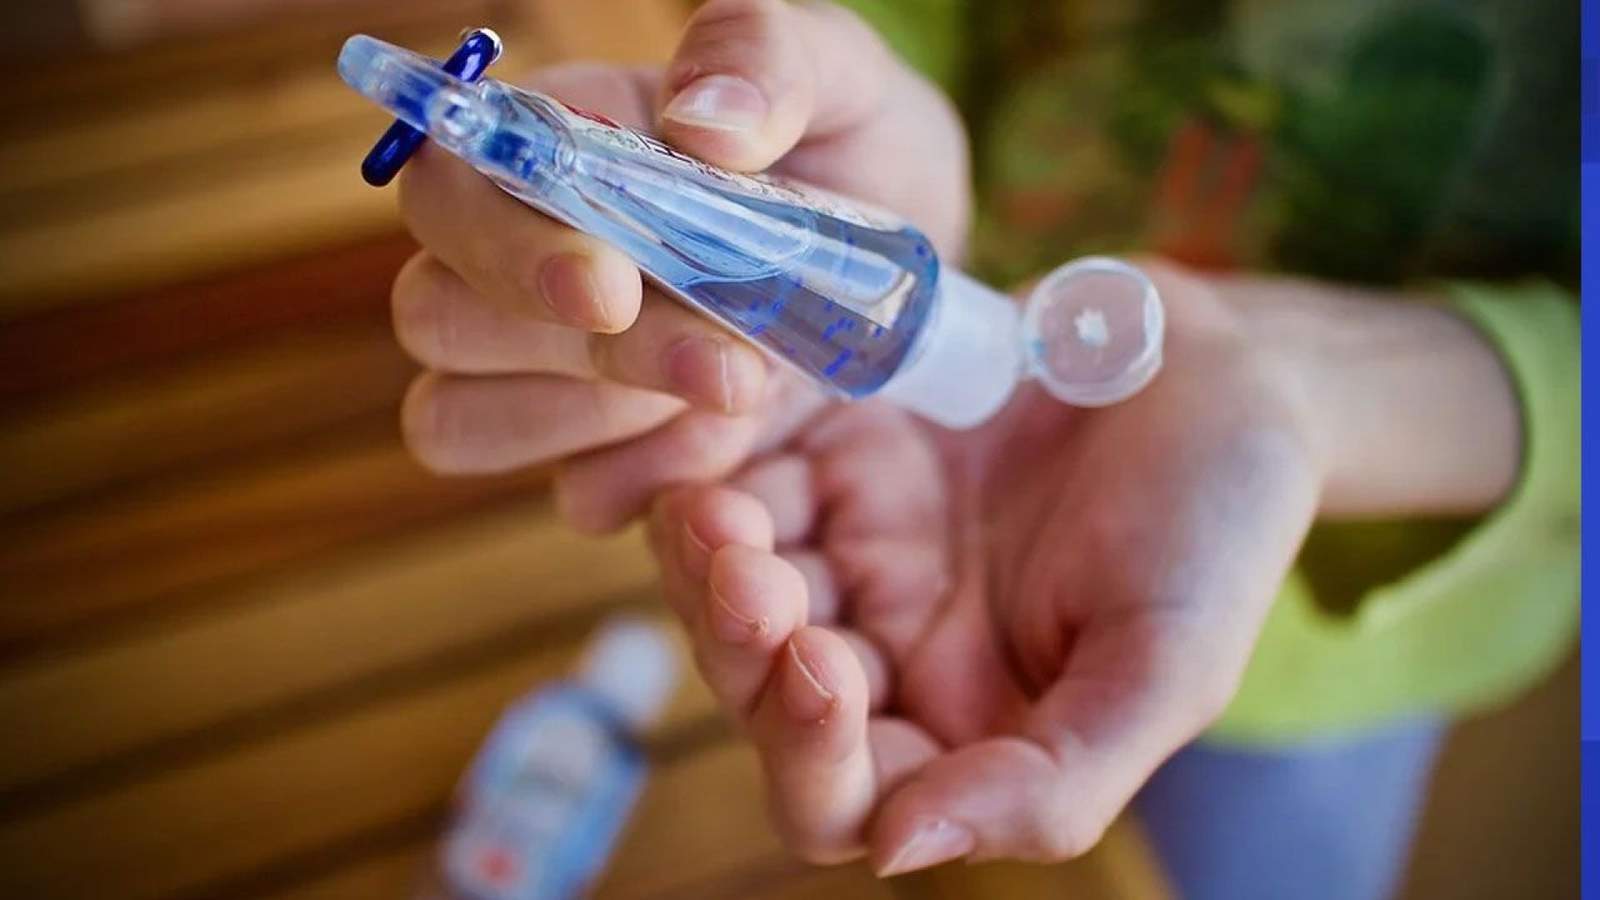 FDA recalls 10 more hand sanitizer products